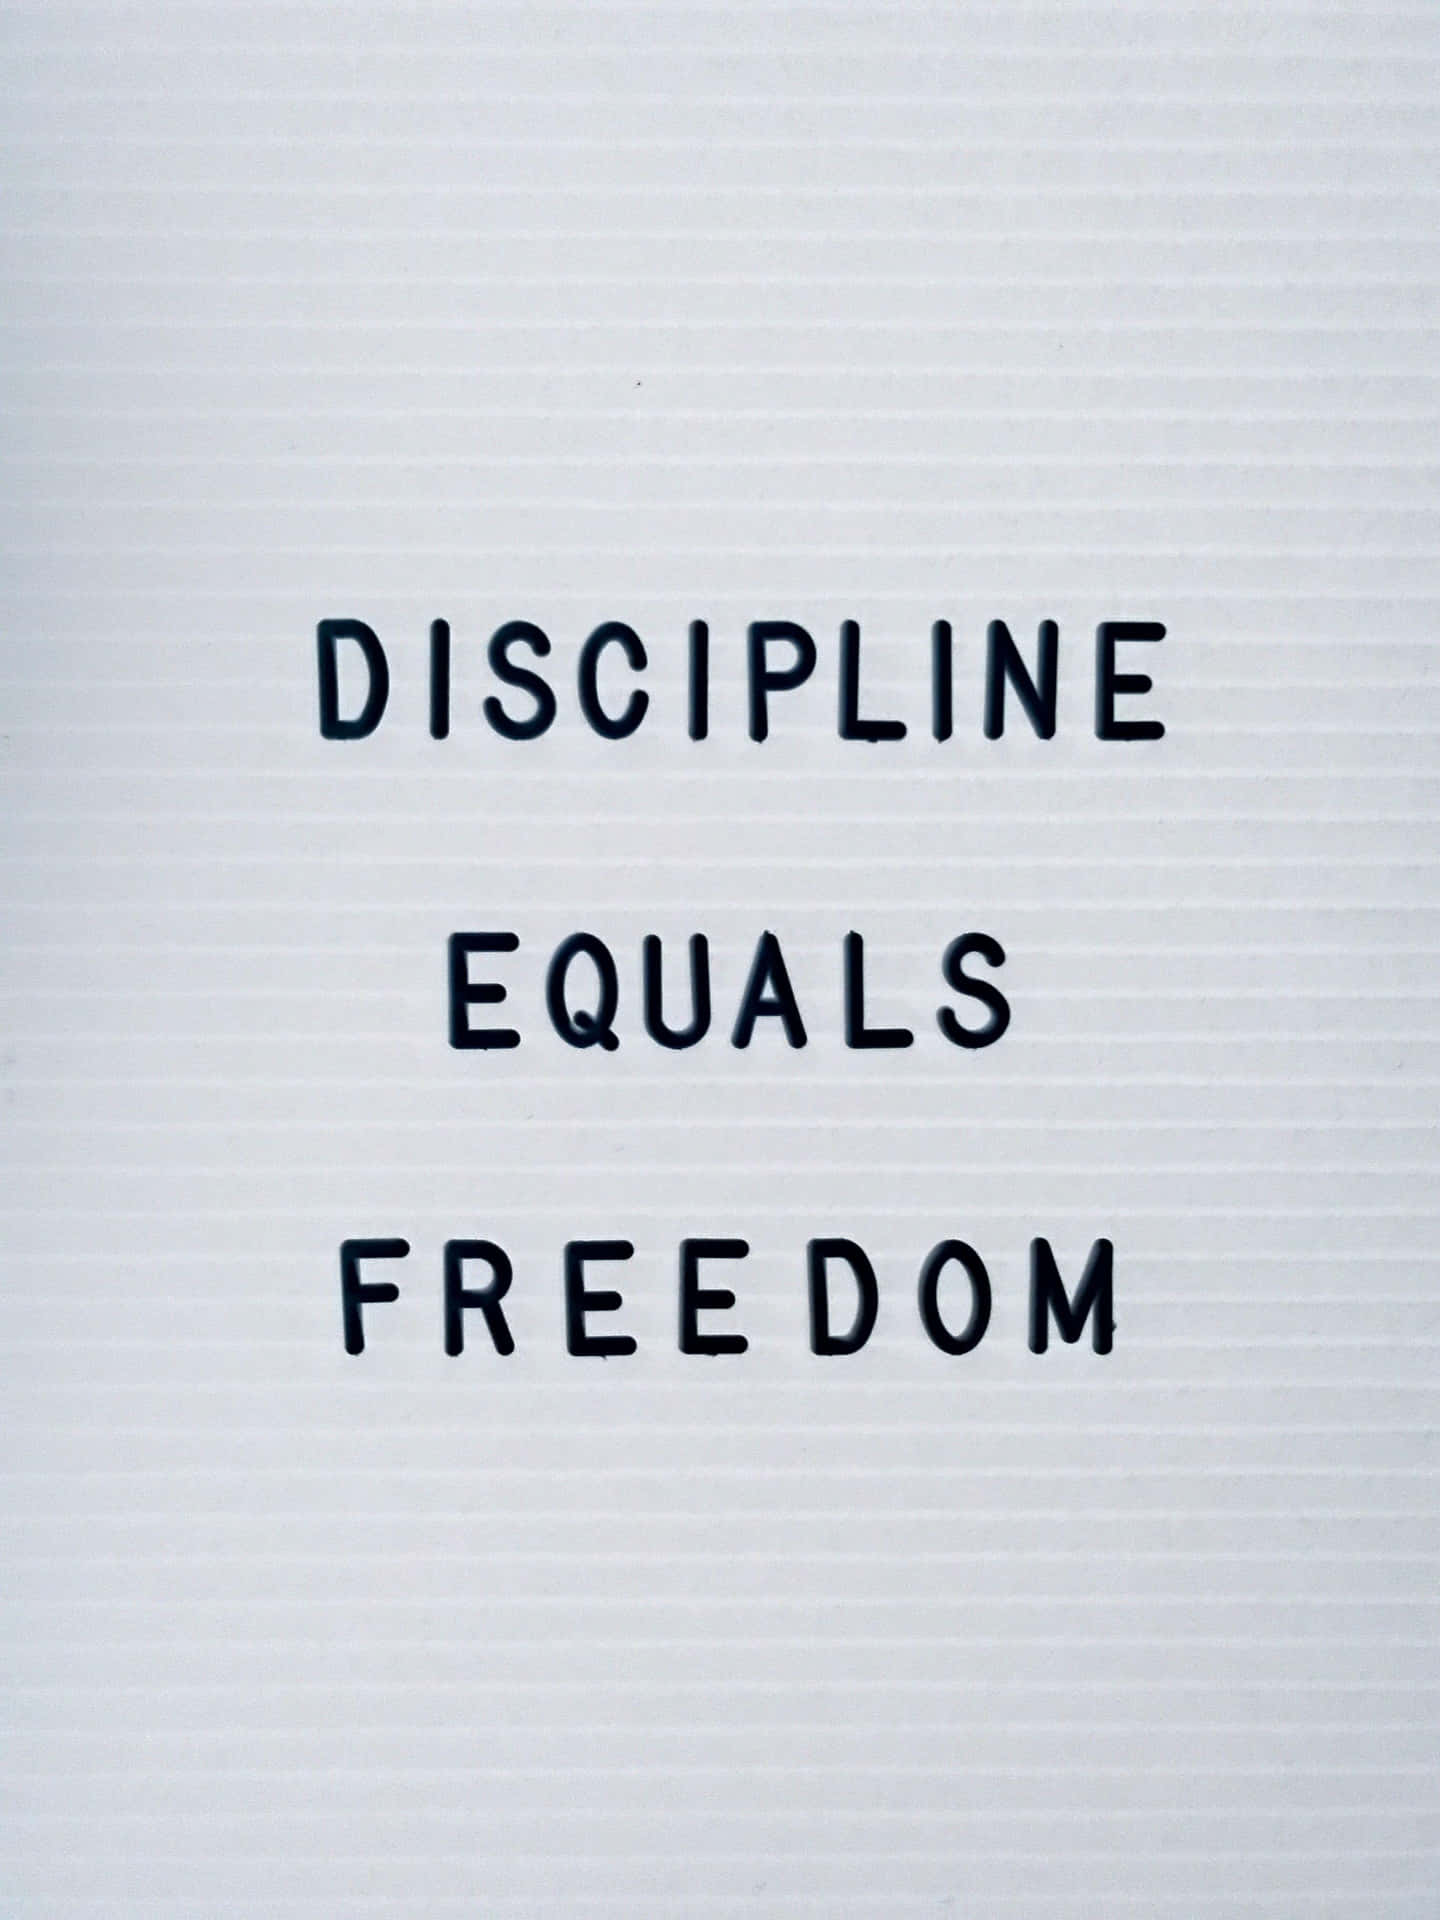 Discipline Equals Freedom Quote Wallpaper